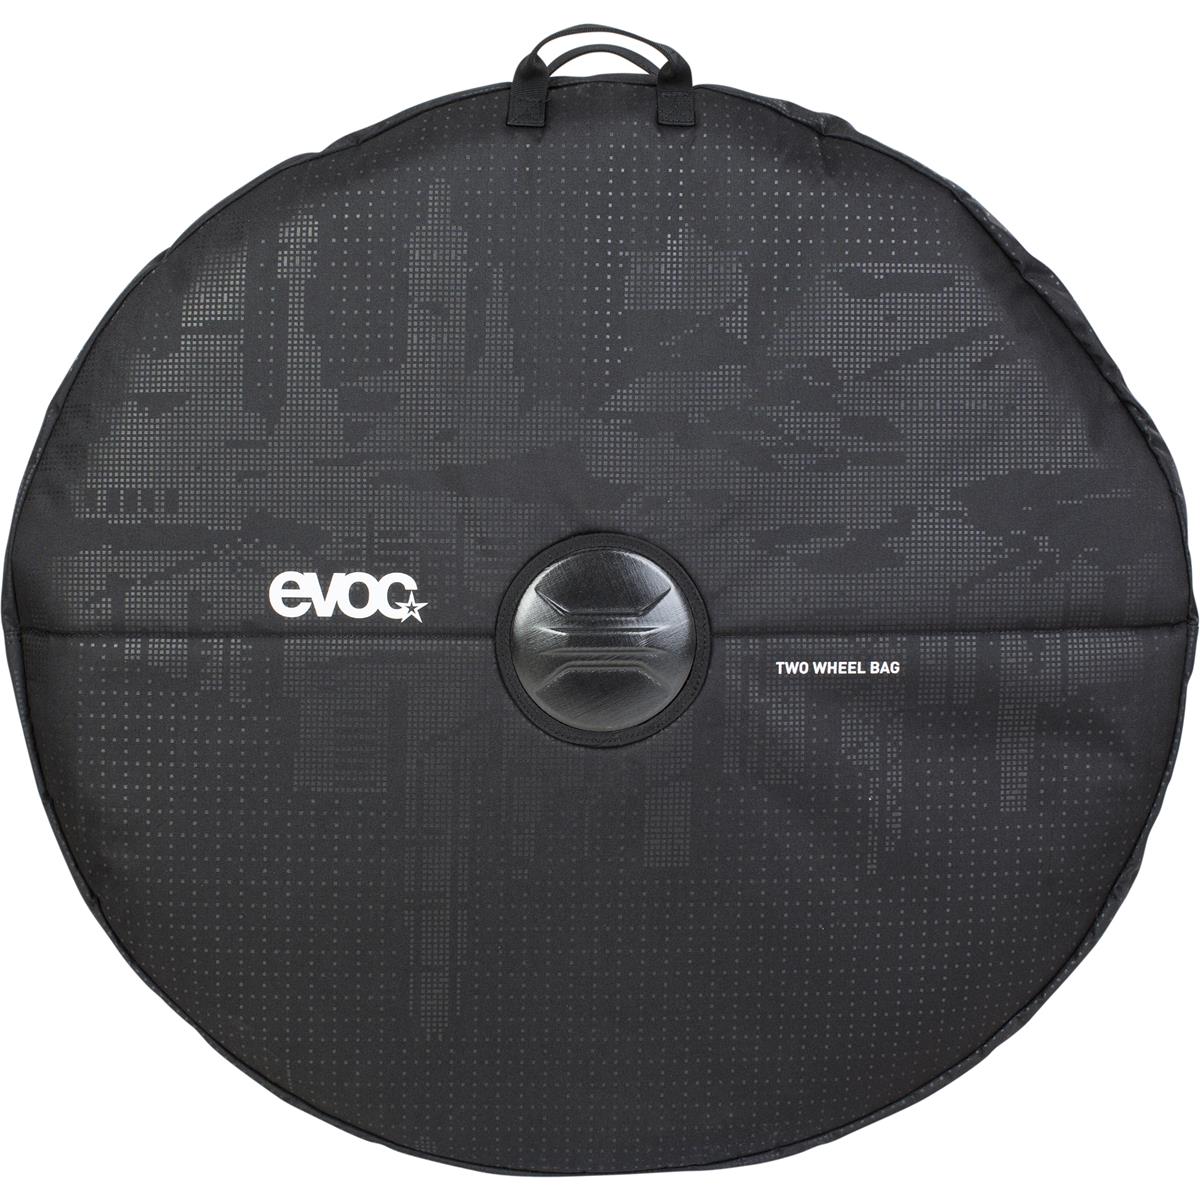 Evoc Travel Bag for 2 Wheels Two Wheel Bag Black